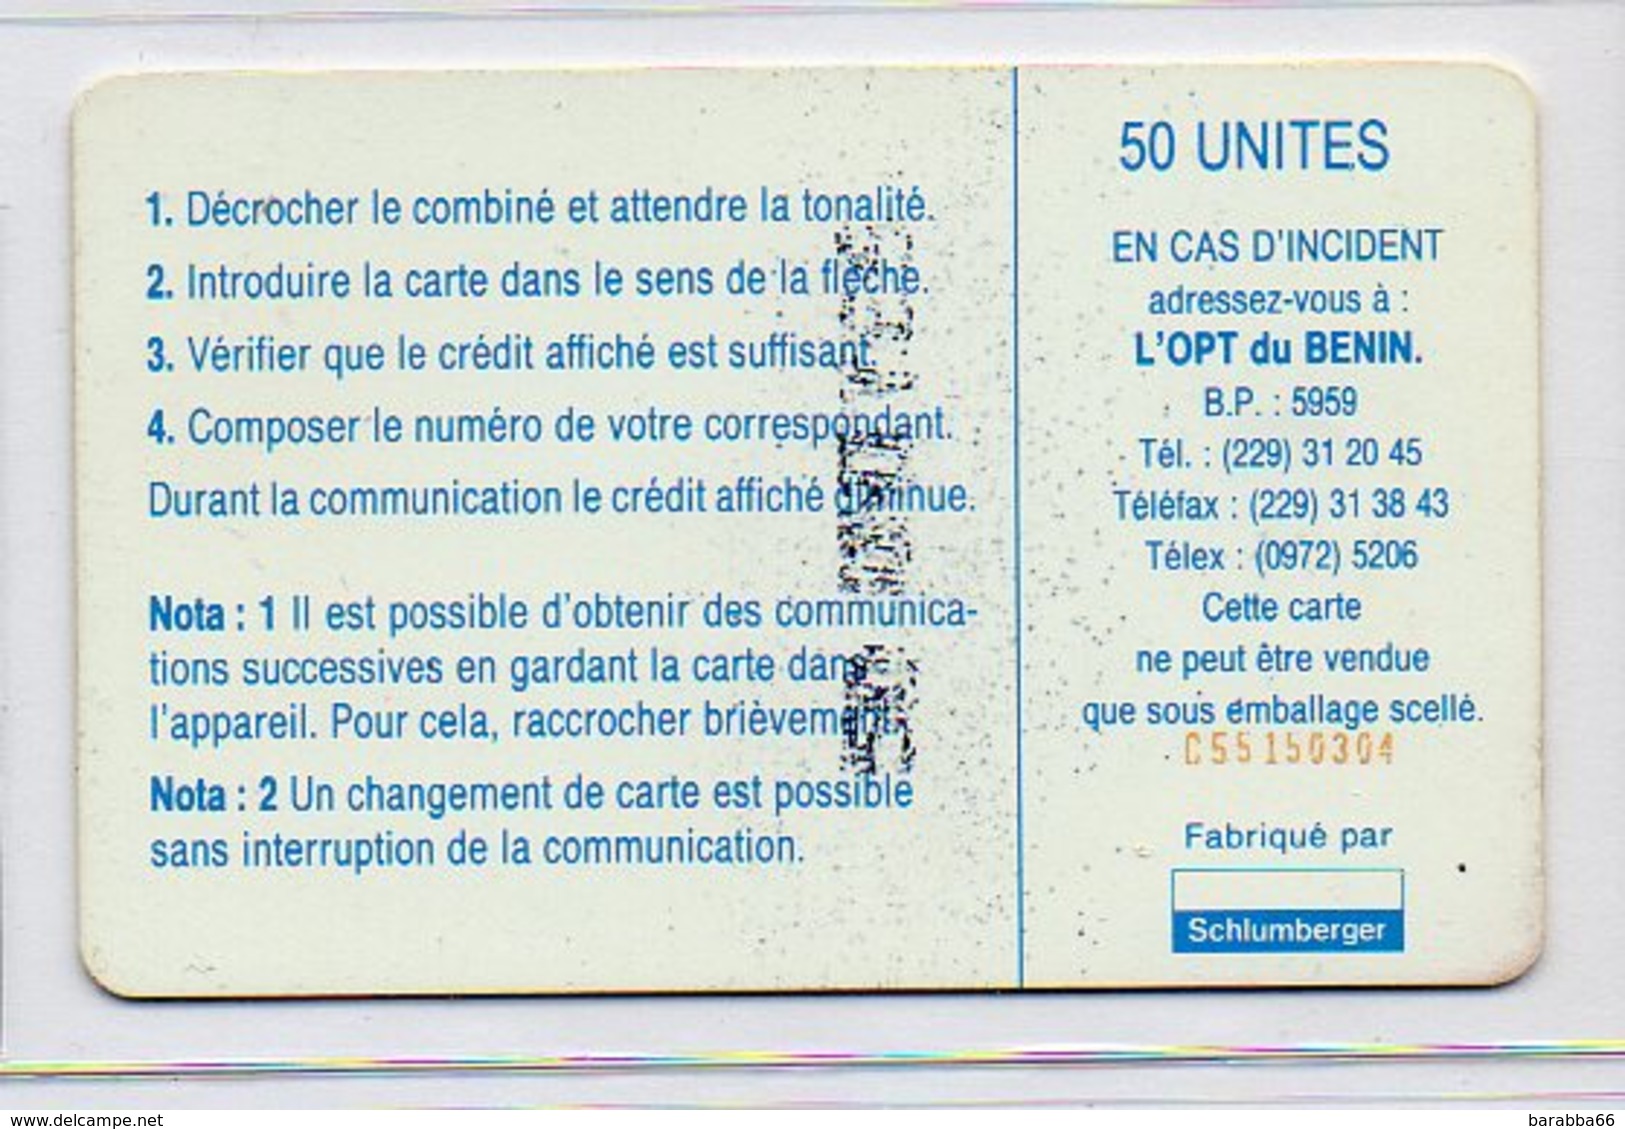 50 UNITES - Benin